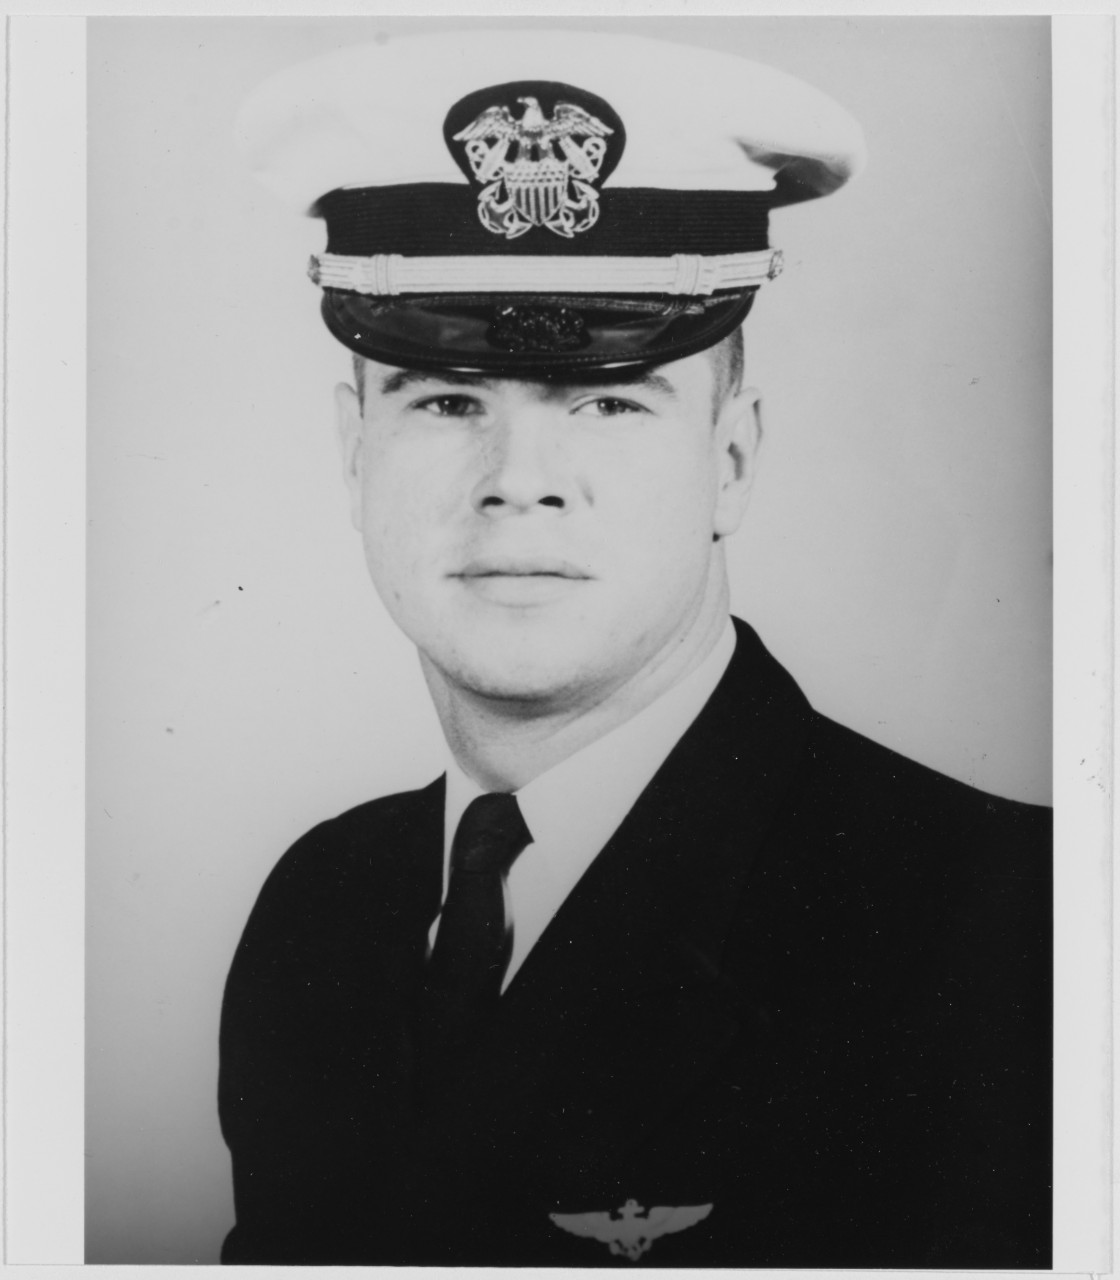 Lieutenant Junior Grade James J. Connell, USN. View taken 21 February 1963